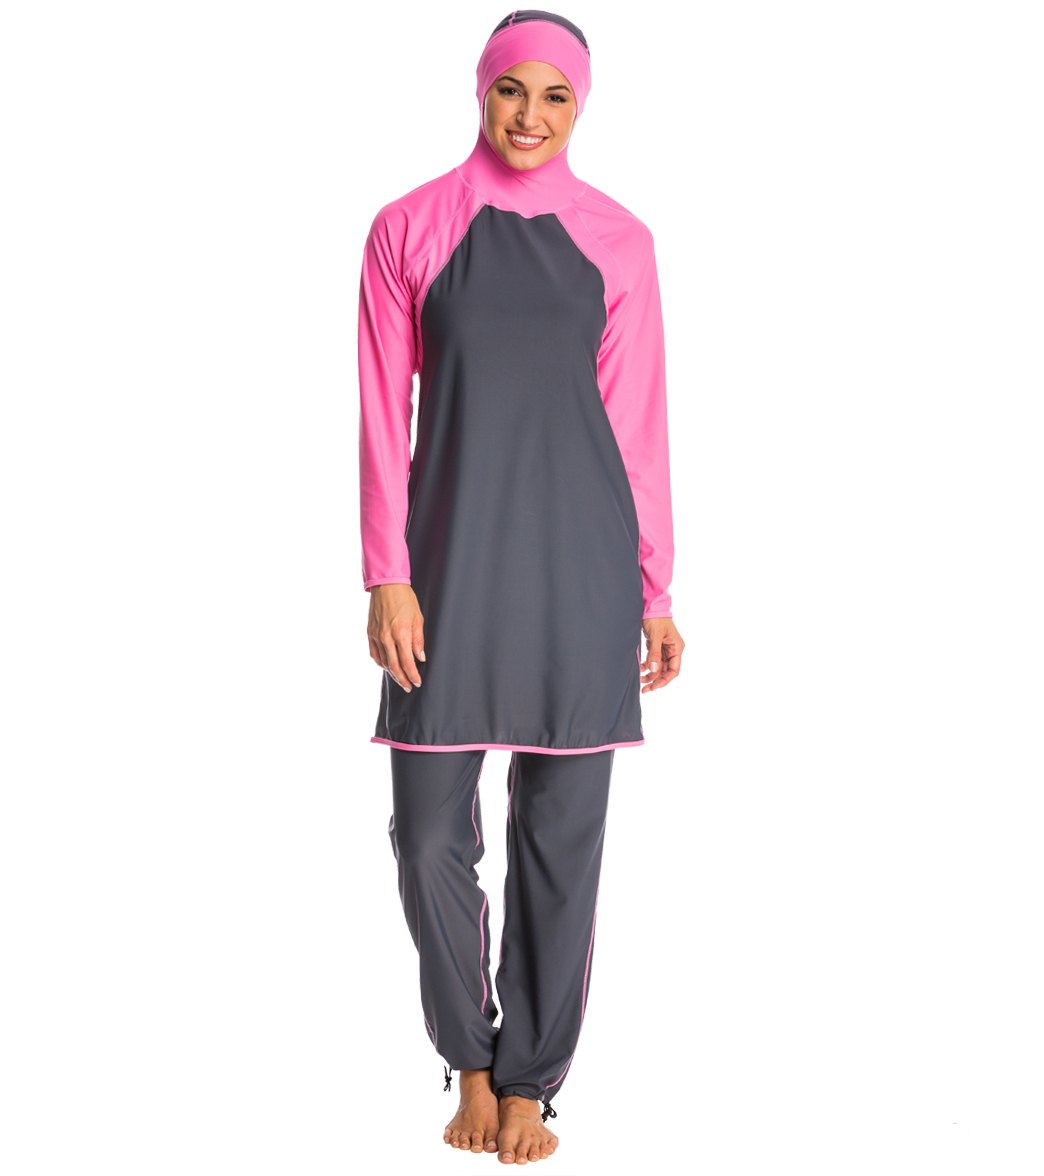 Alsharifa Laguna Modest Swimsuit - Gray/Pink Small - Swimoutlet.com